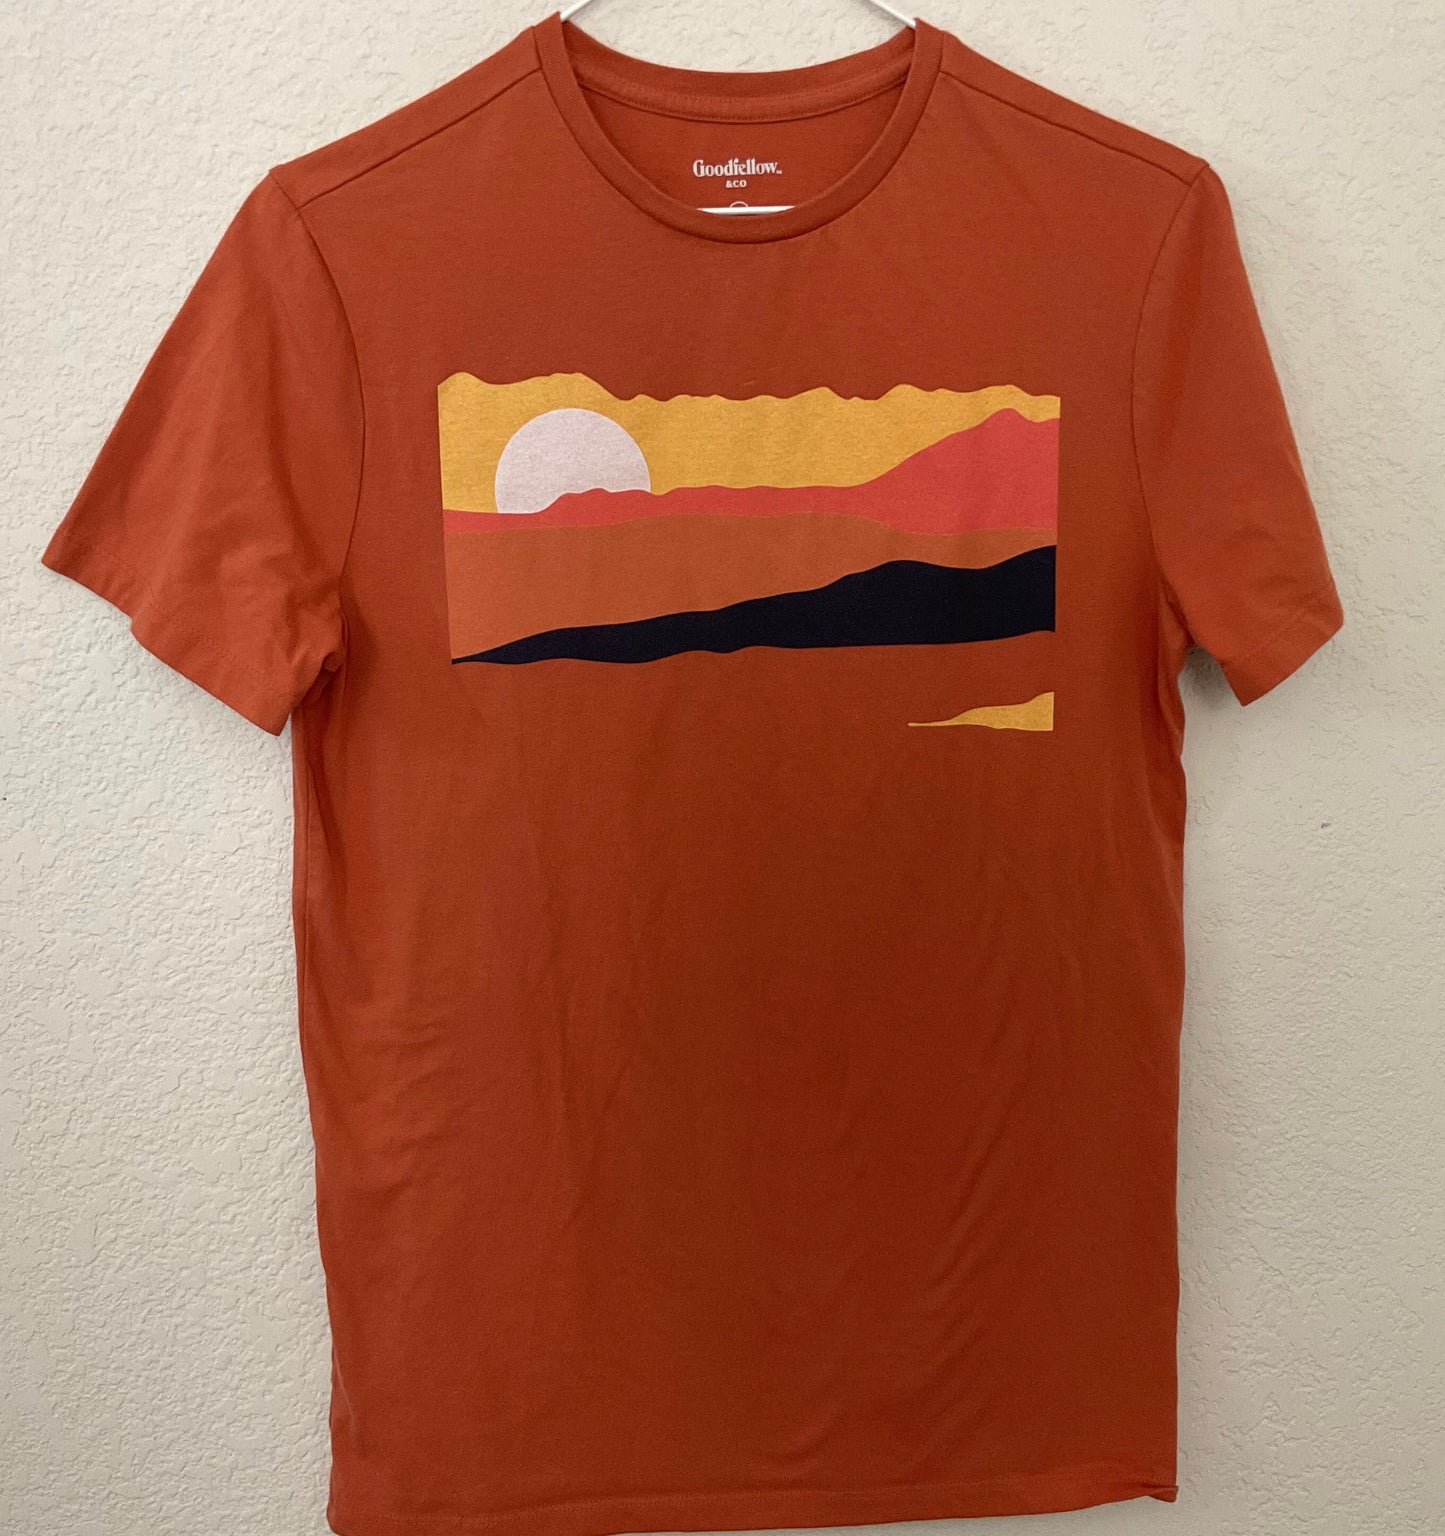 Goodfellow & Co Men’s Graphic T-shirt Size S.